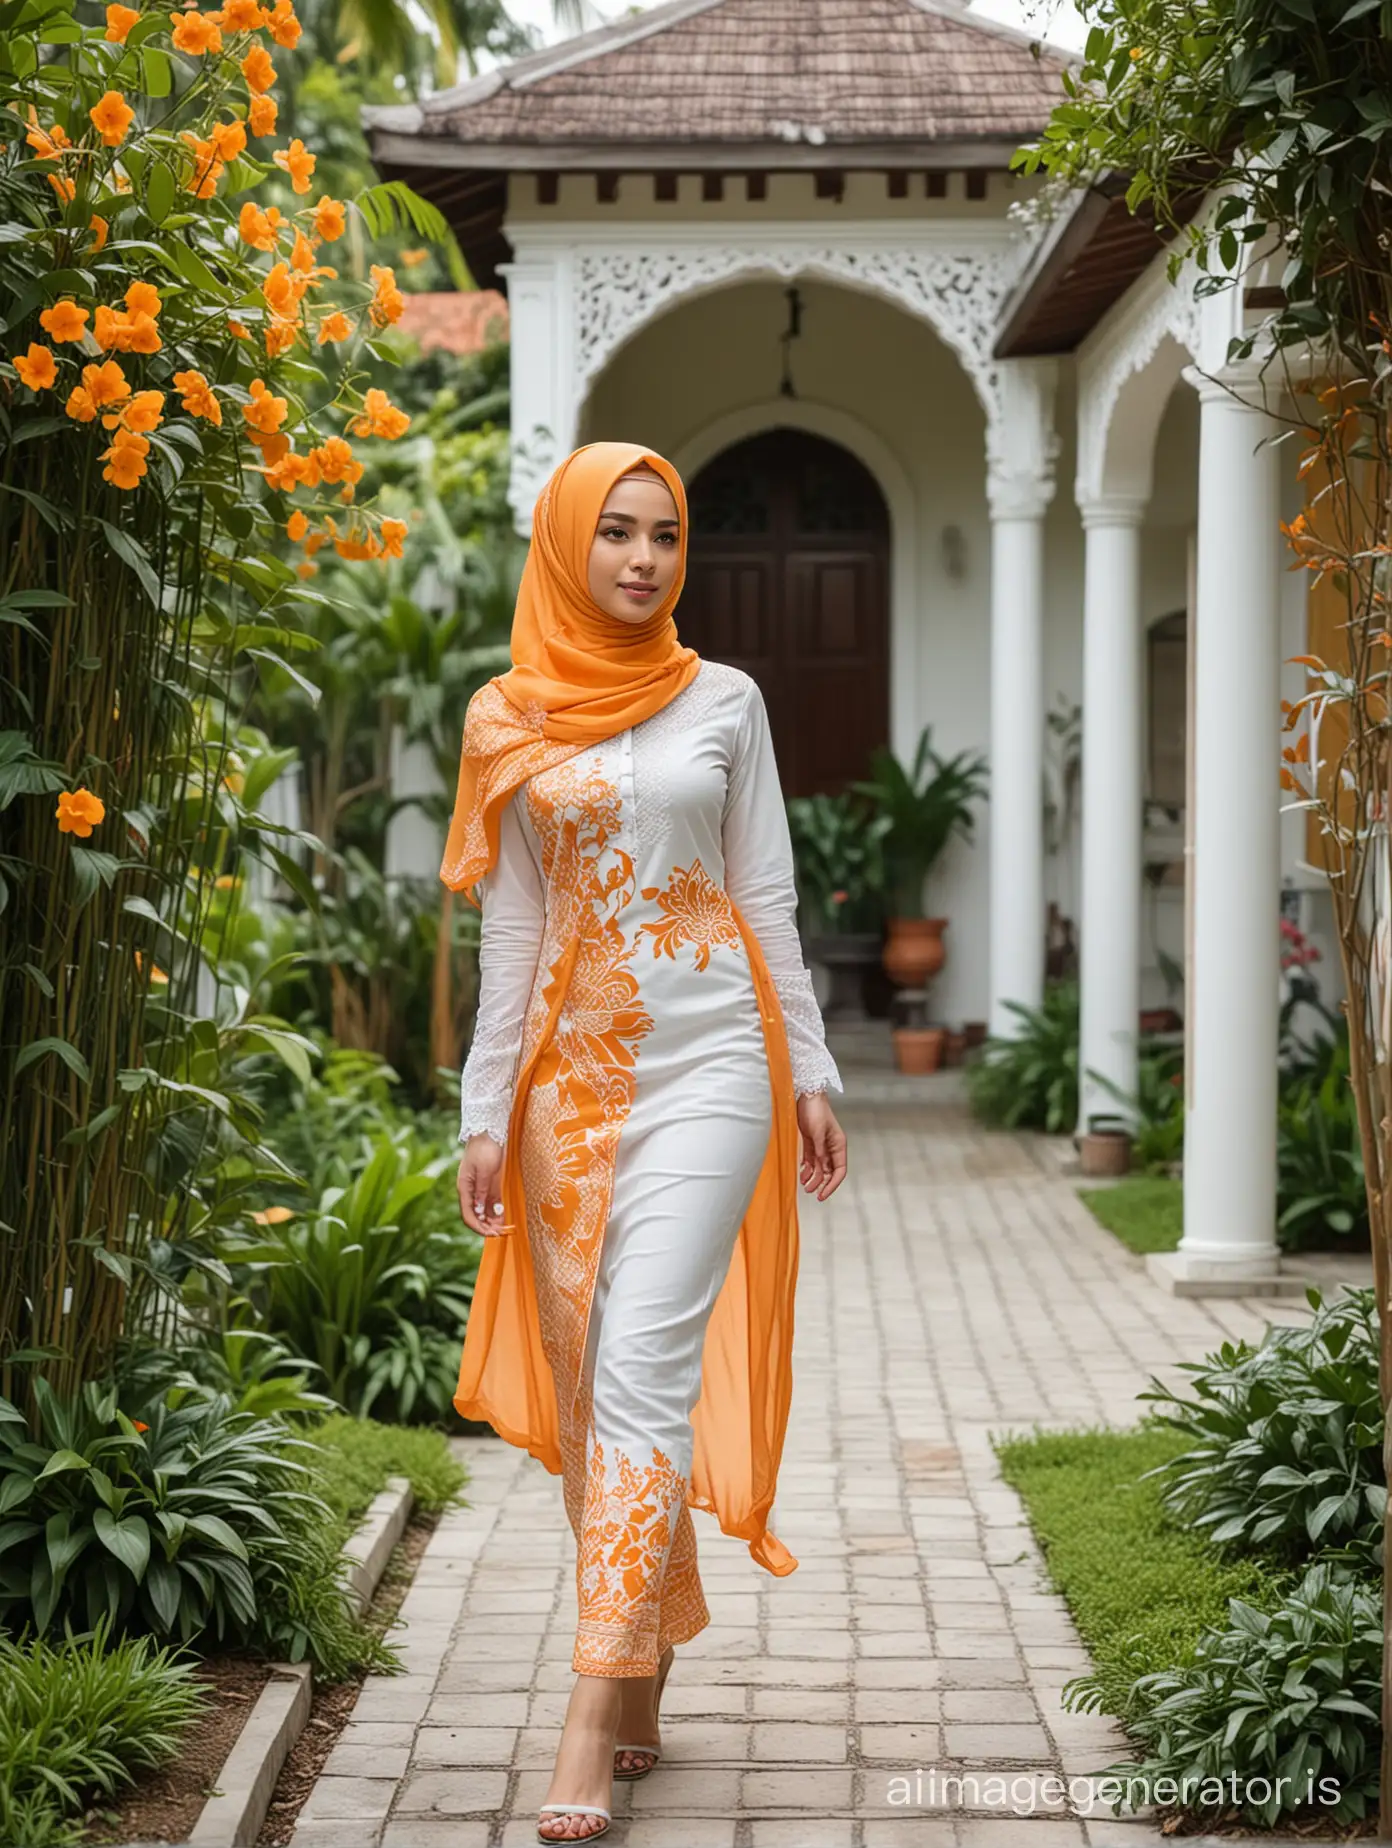 Elegant-Hijabi-Woman-Strolling-in-Serene-Garden-Setting